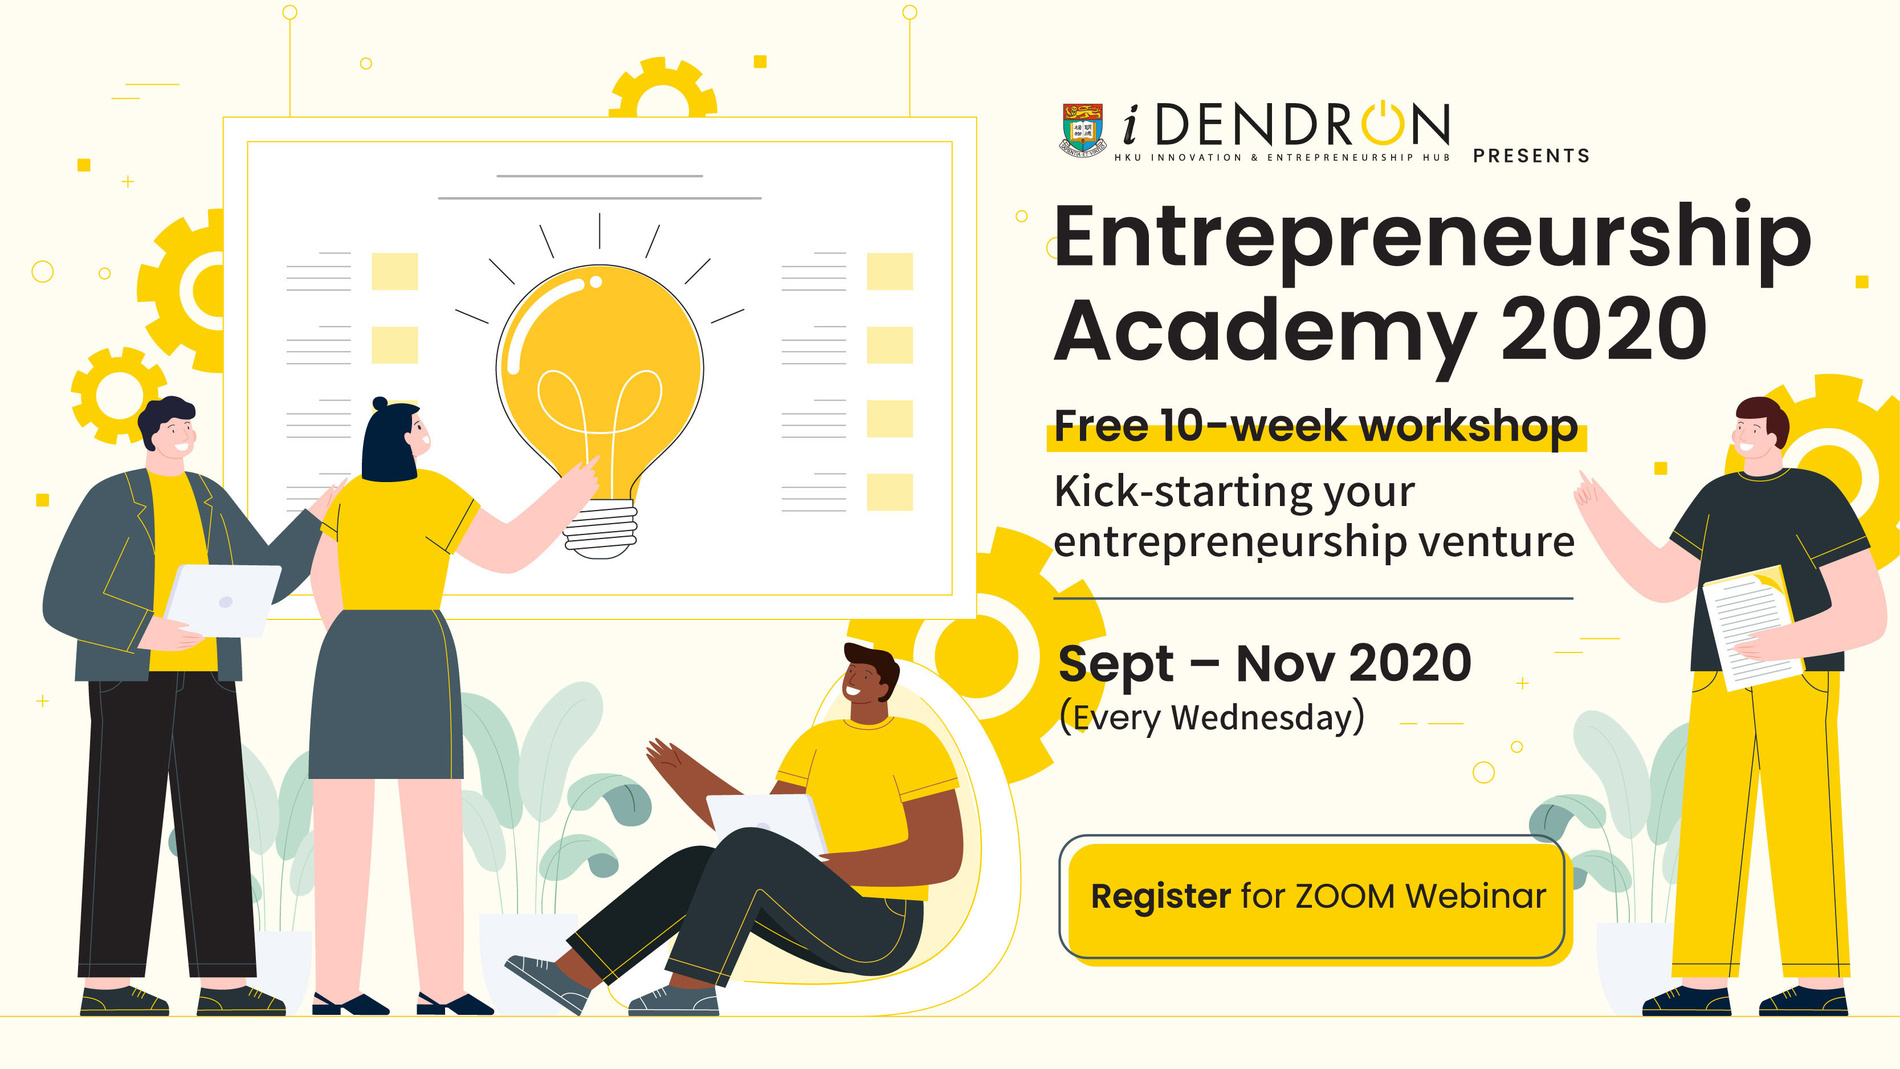 HKU iDendron Presents: Entrepreneurship Academy 2020 今年度的「創業學堂」移師網上逢星期三舉行，記得登記報名！